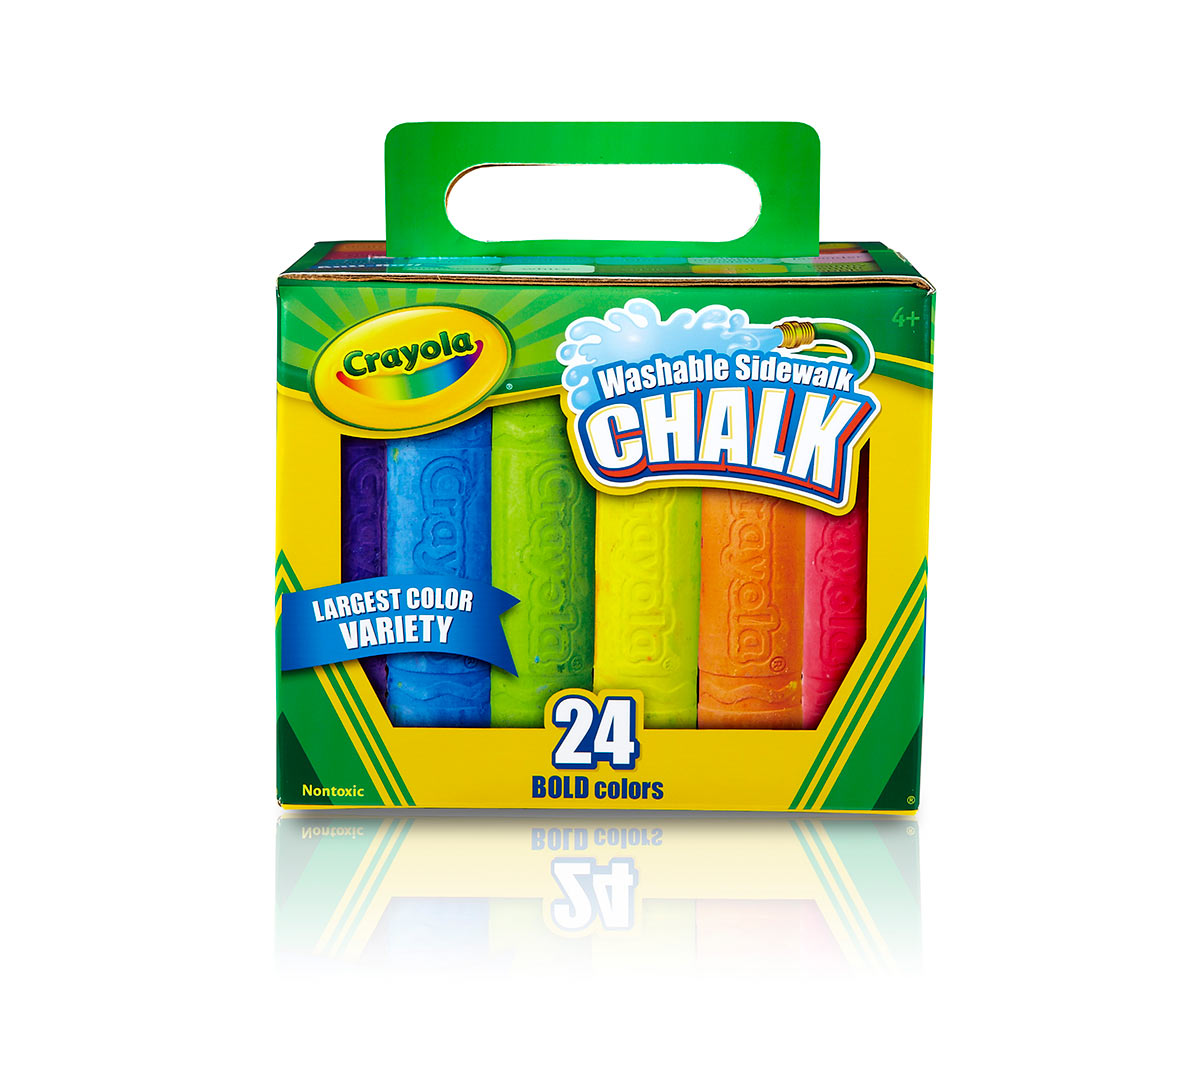 Crayola Drawing Chalk, Craft Supplies, 24 Count